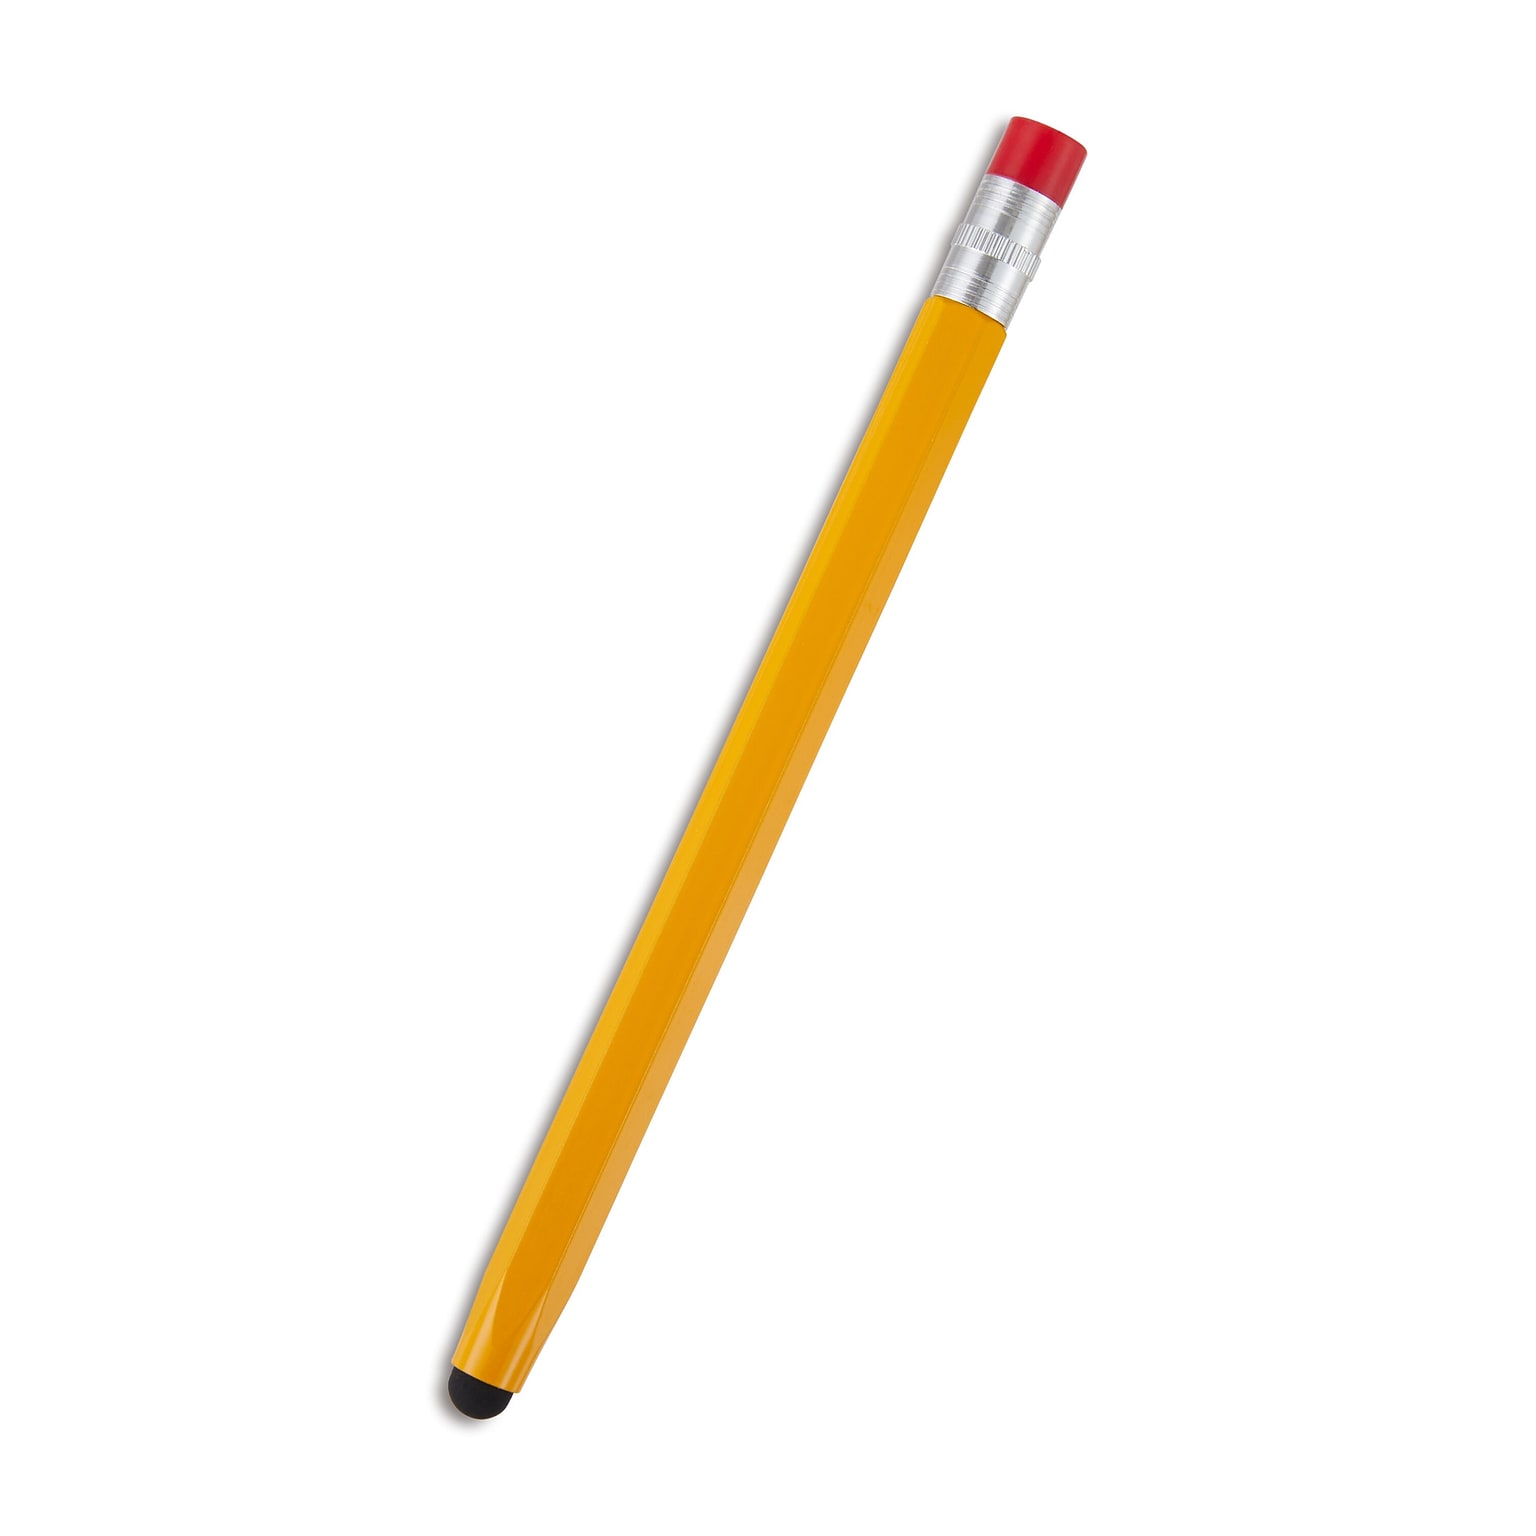 Staples Universal Stylus, Pencil Design